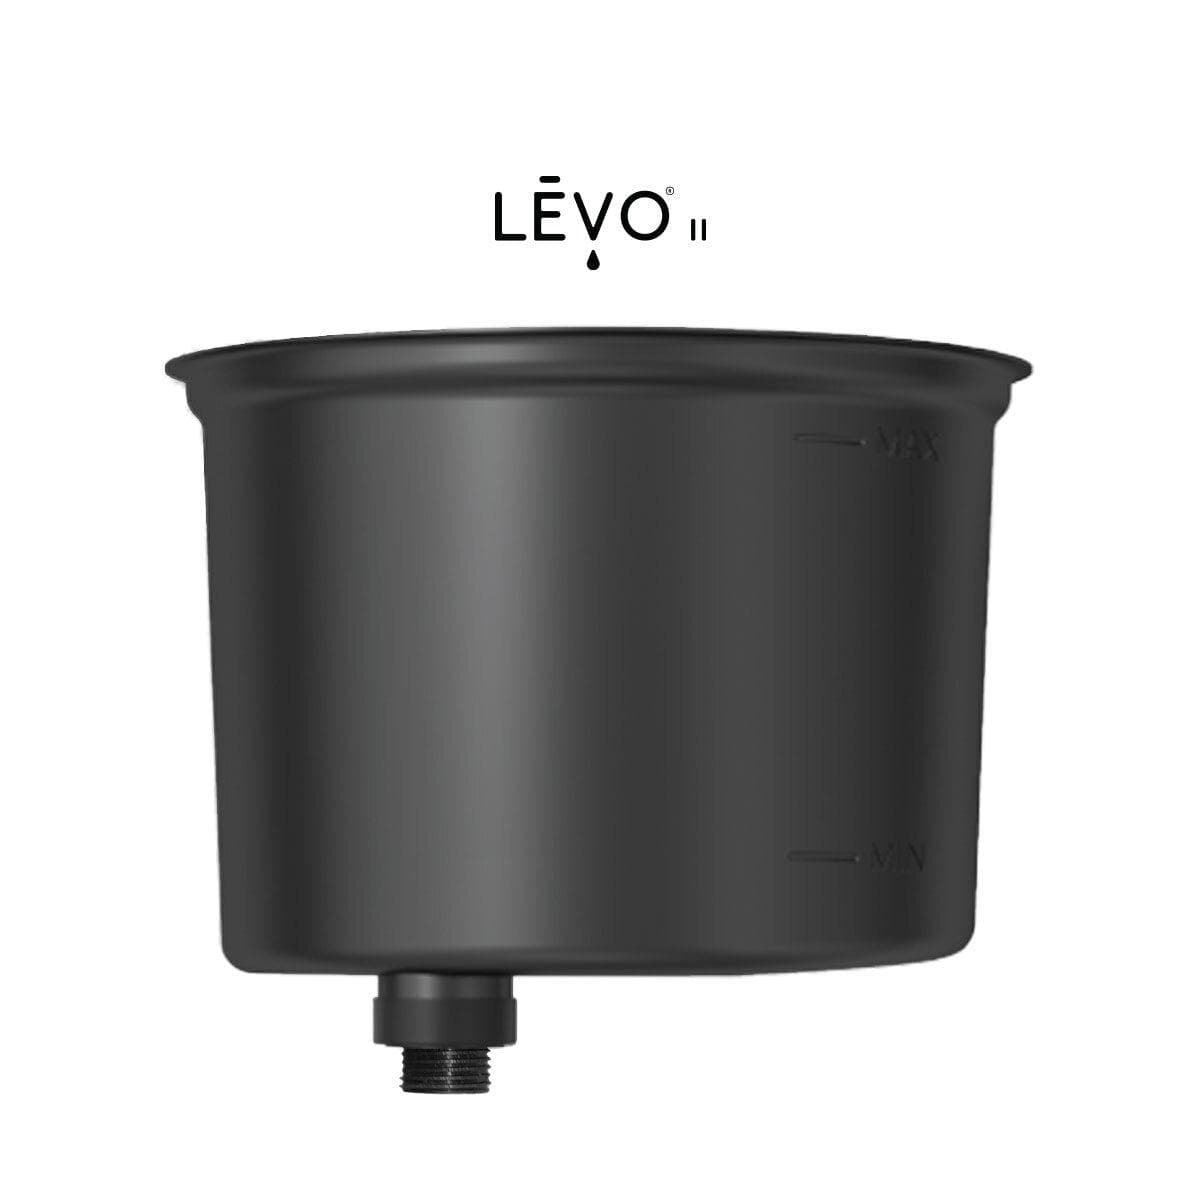 LEVO II reservoir basin spare part with ceramic coating 